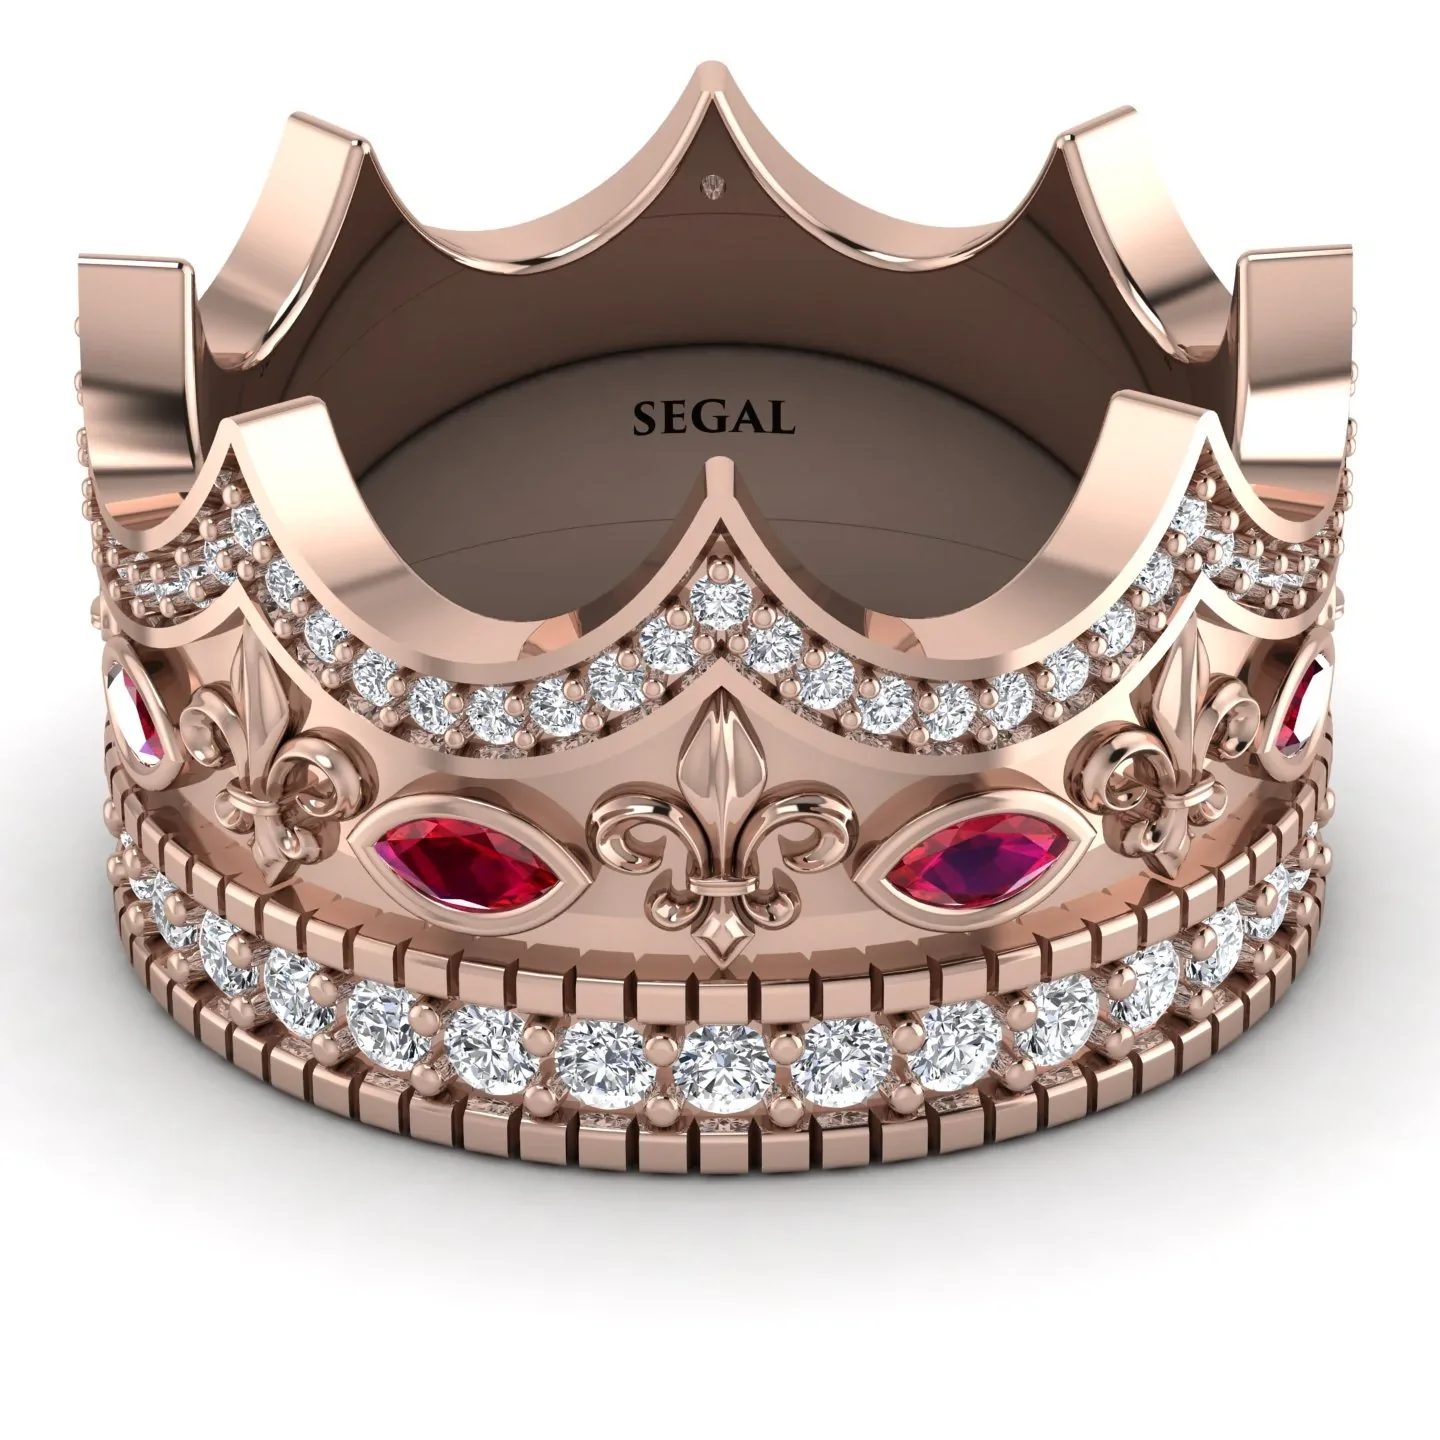 Image of Royal Diamond Crown Ring For Men - Harold No. 11